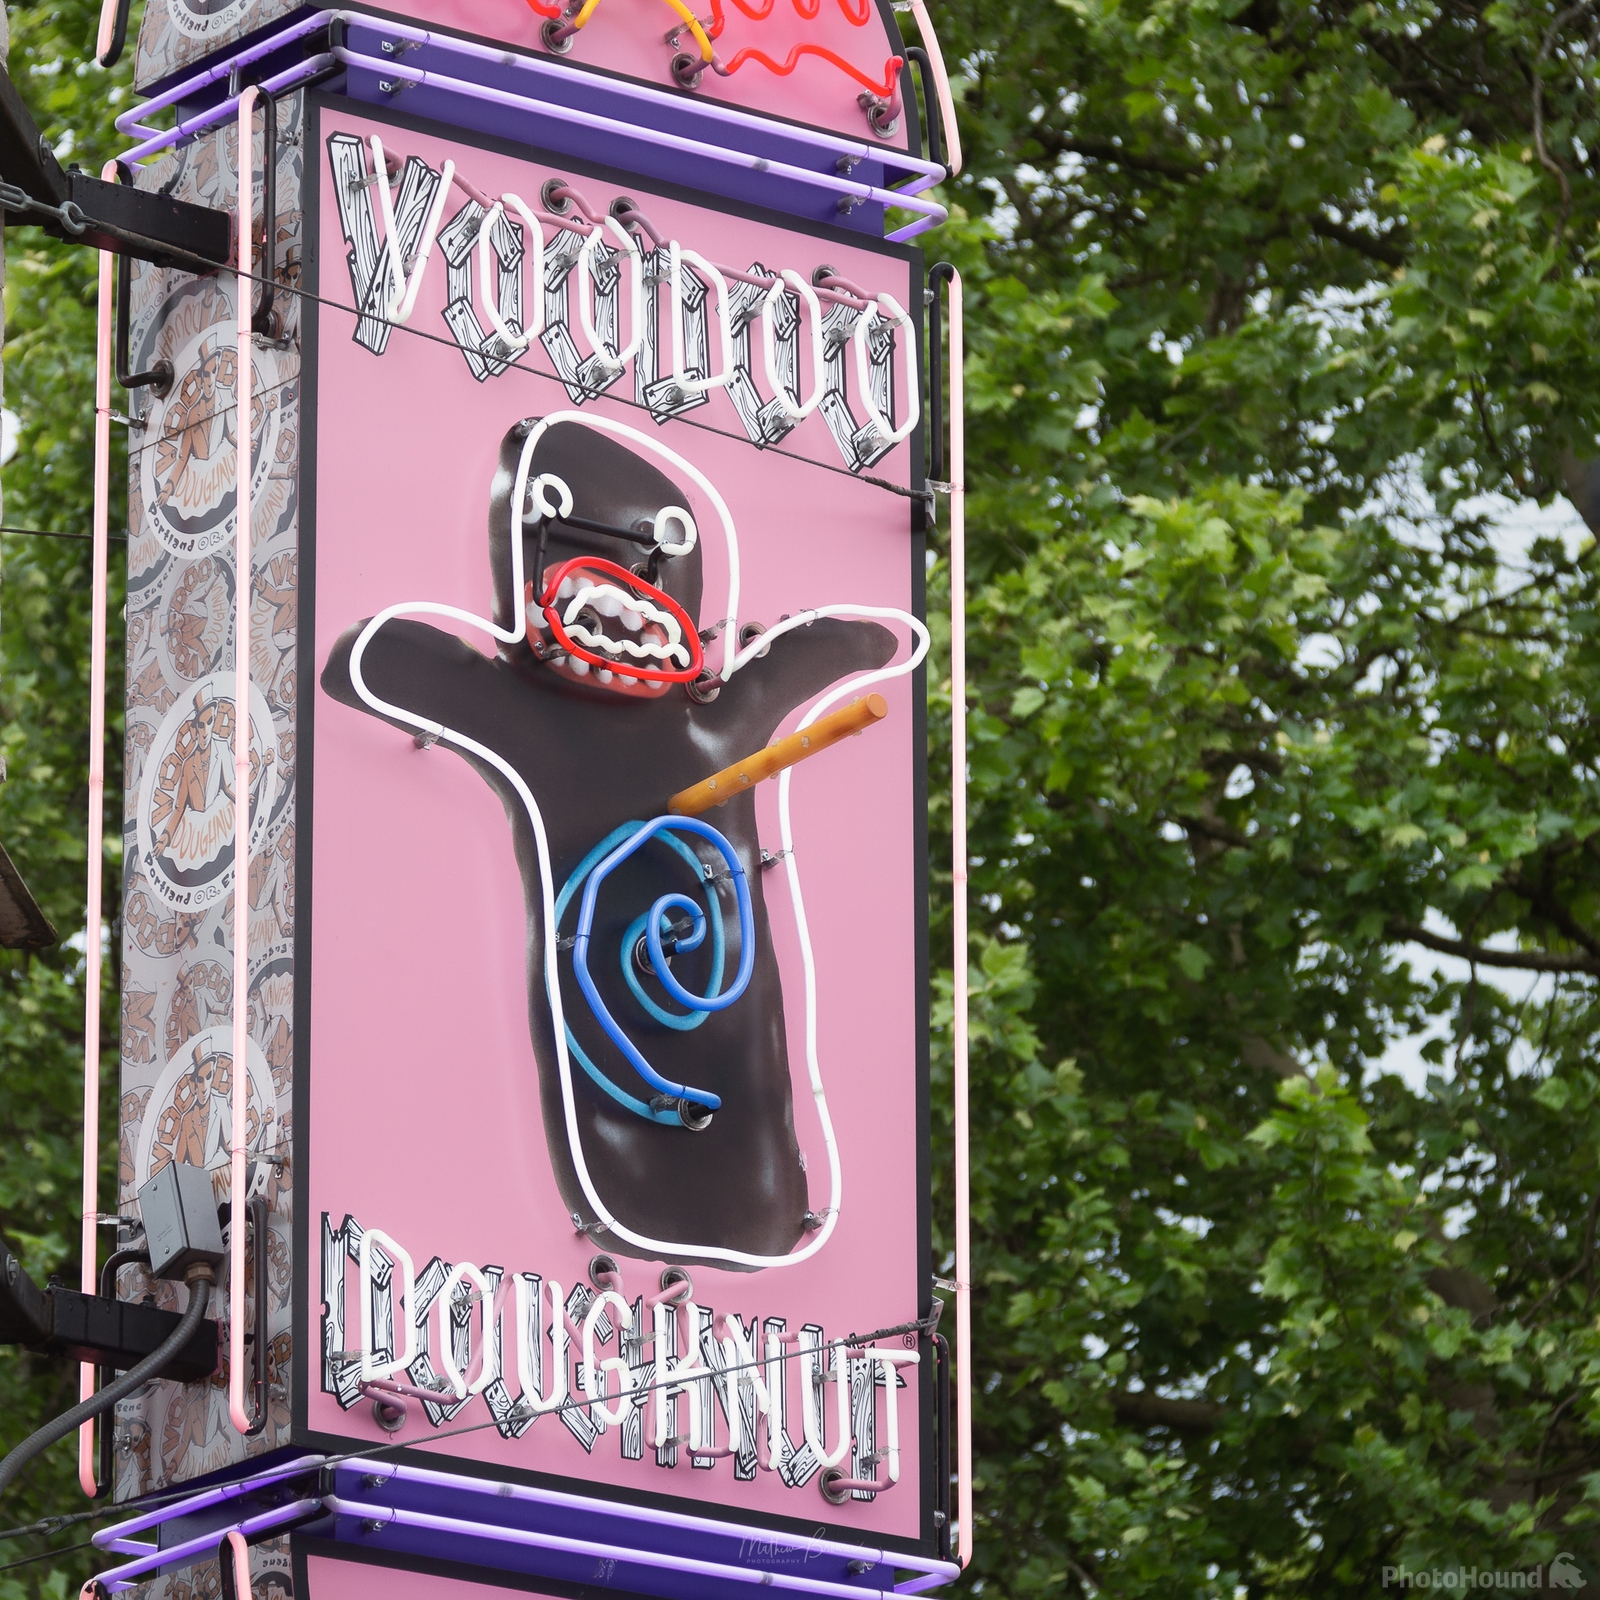 Image of Voodoo Doughnut by Mathew Browne